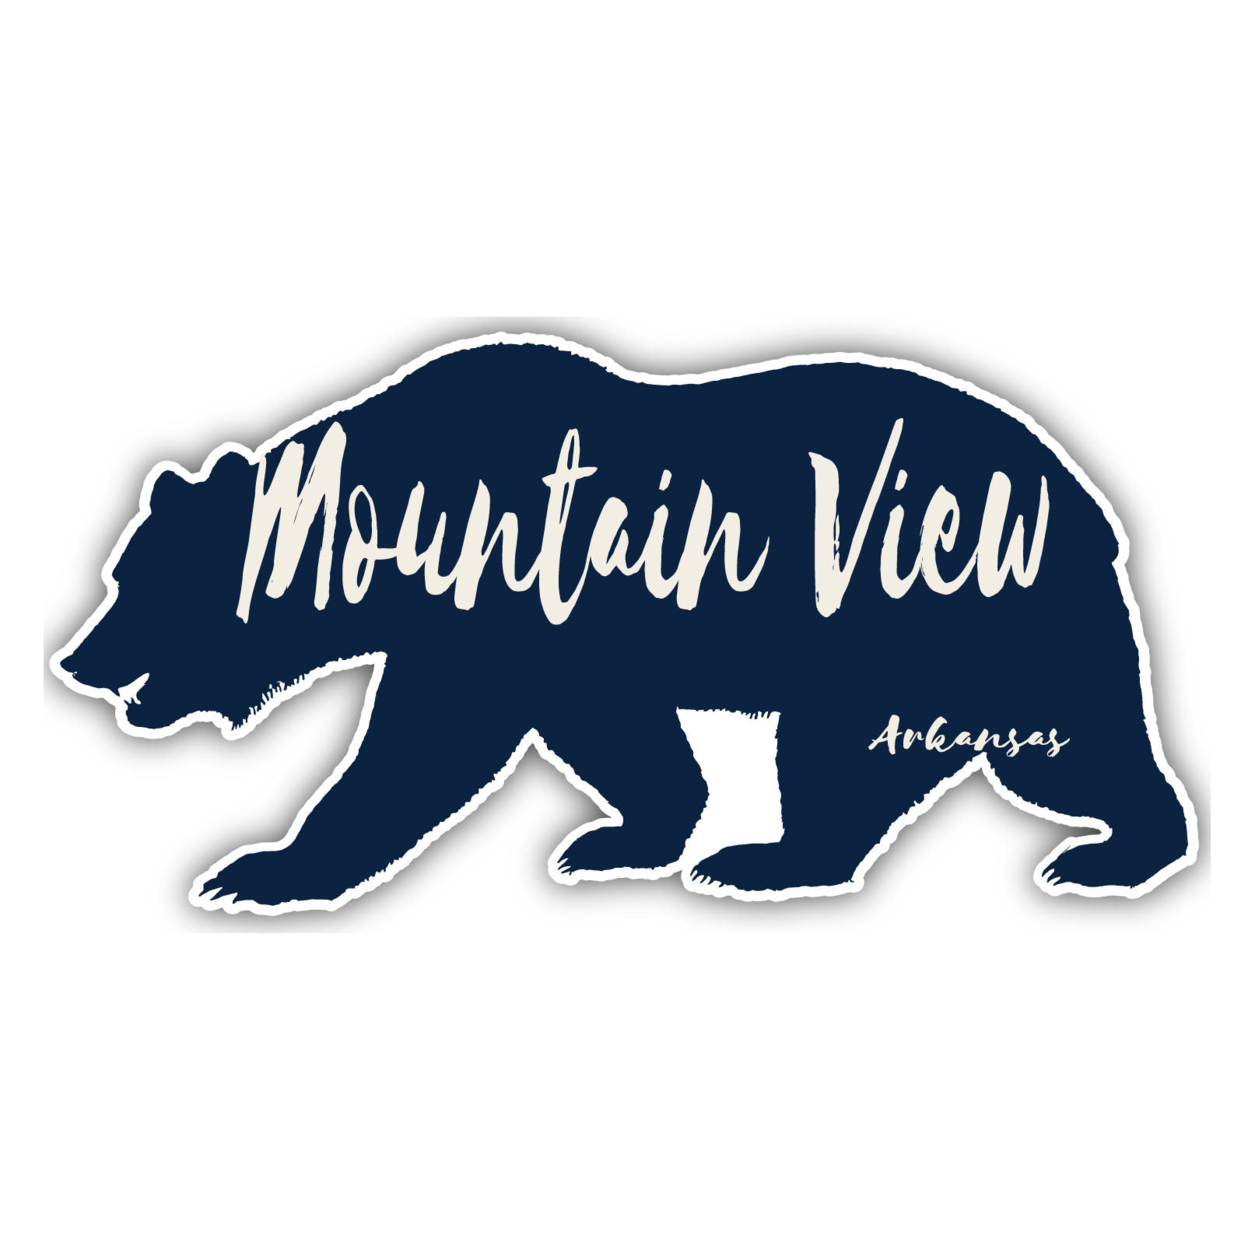 Mountain View Arkansas Souvenir Decorative Stickers (Choose Theme And Size) - Single Unit, 4-Inch, Adventures Awaits